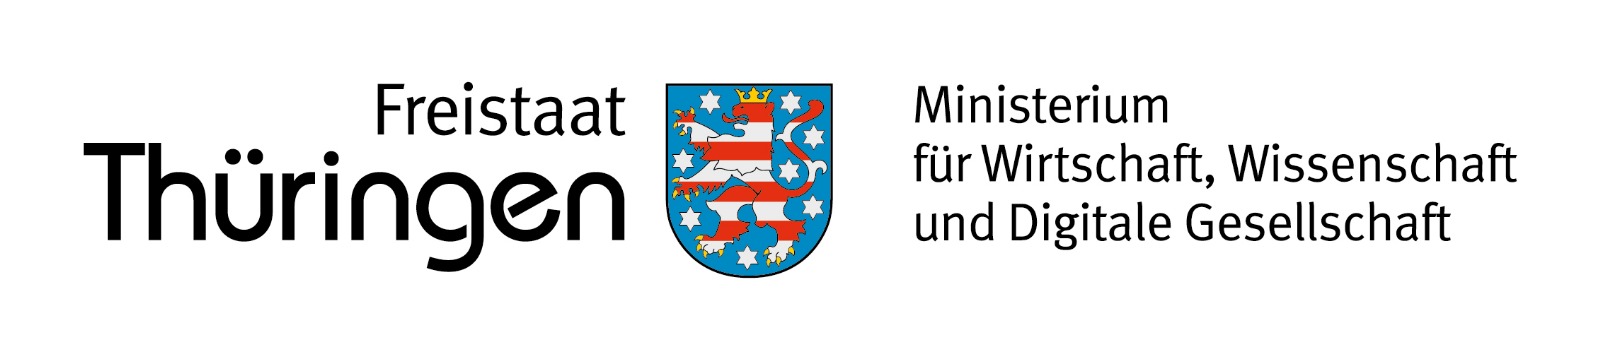 PQ_Logo